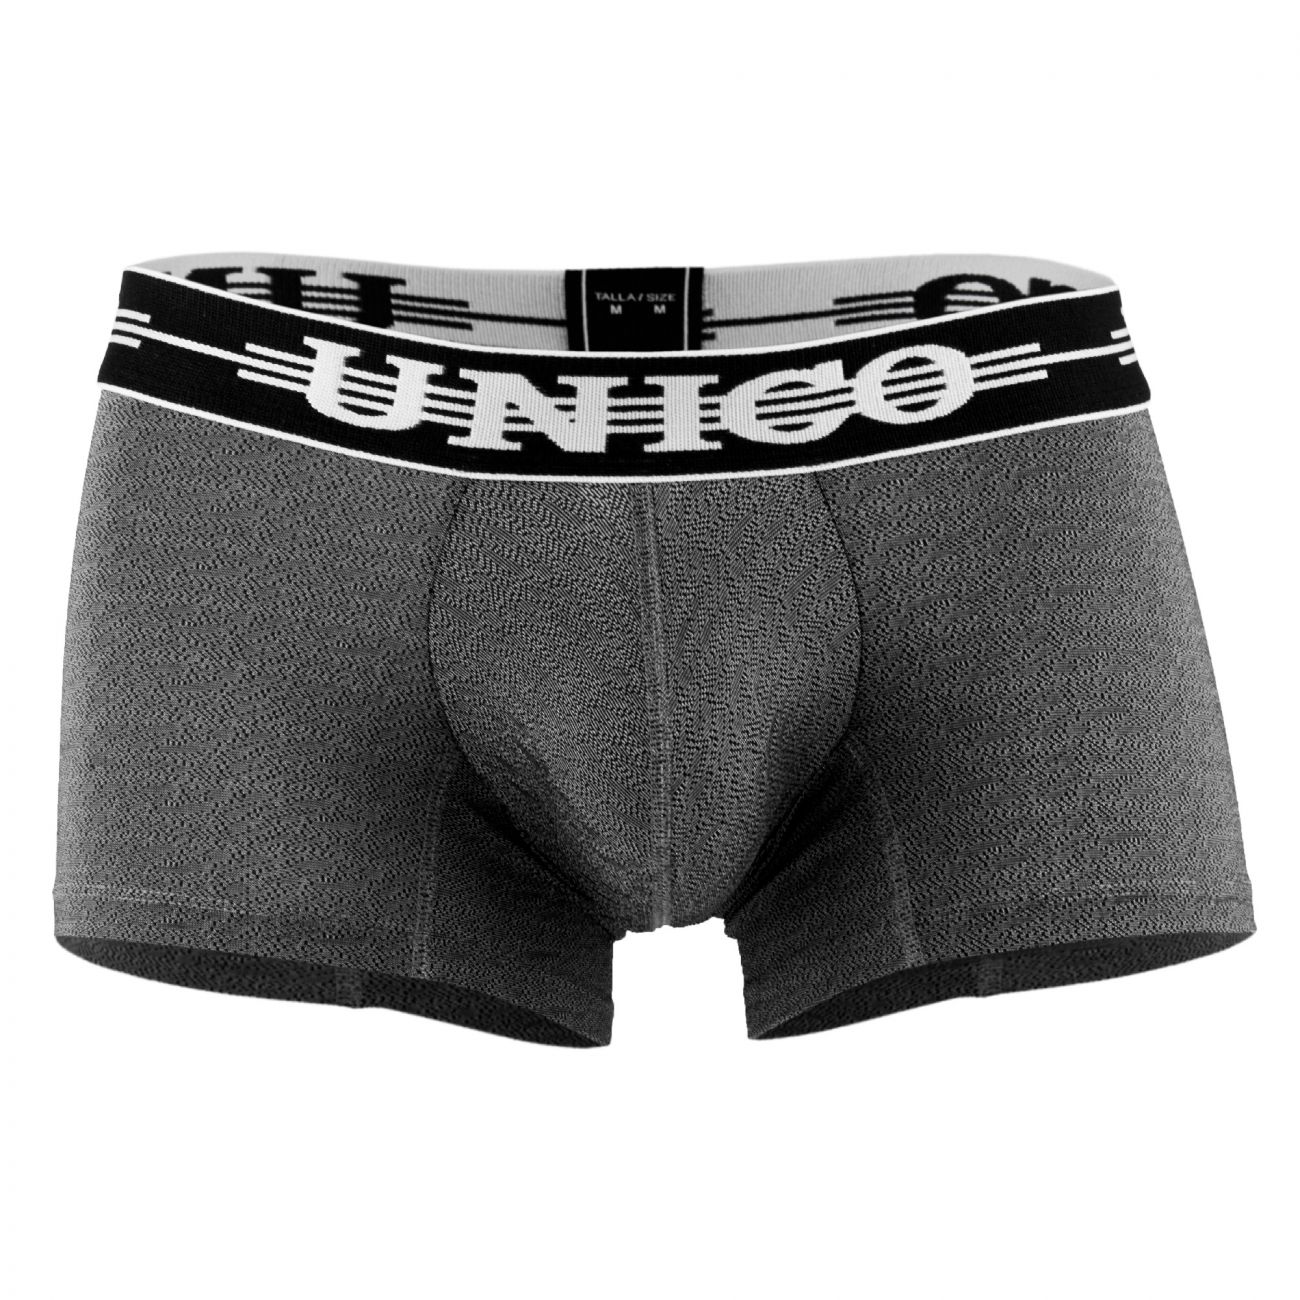 Mens Underwear: Unico 1802010011194 Boxer Briefs Self | eBay